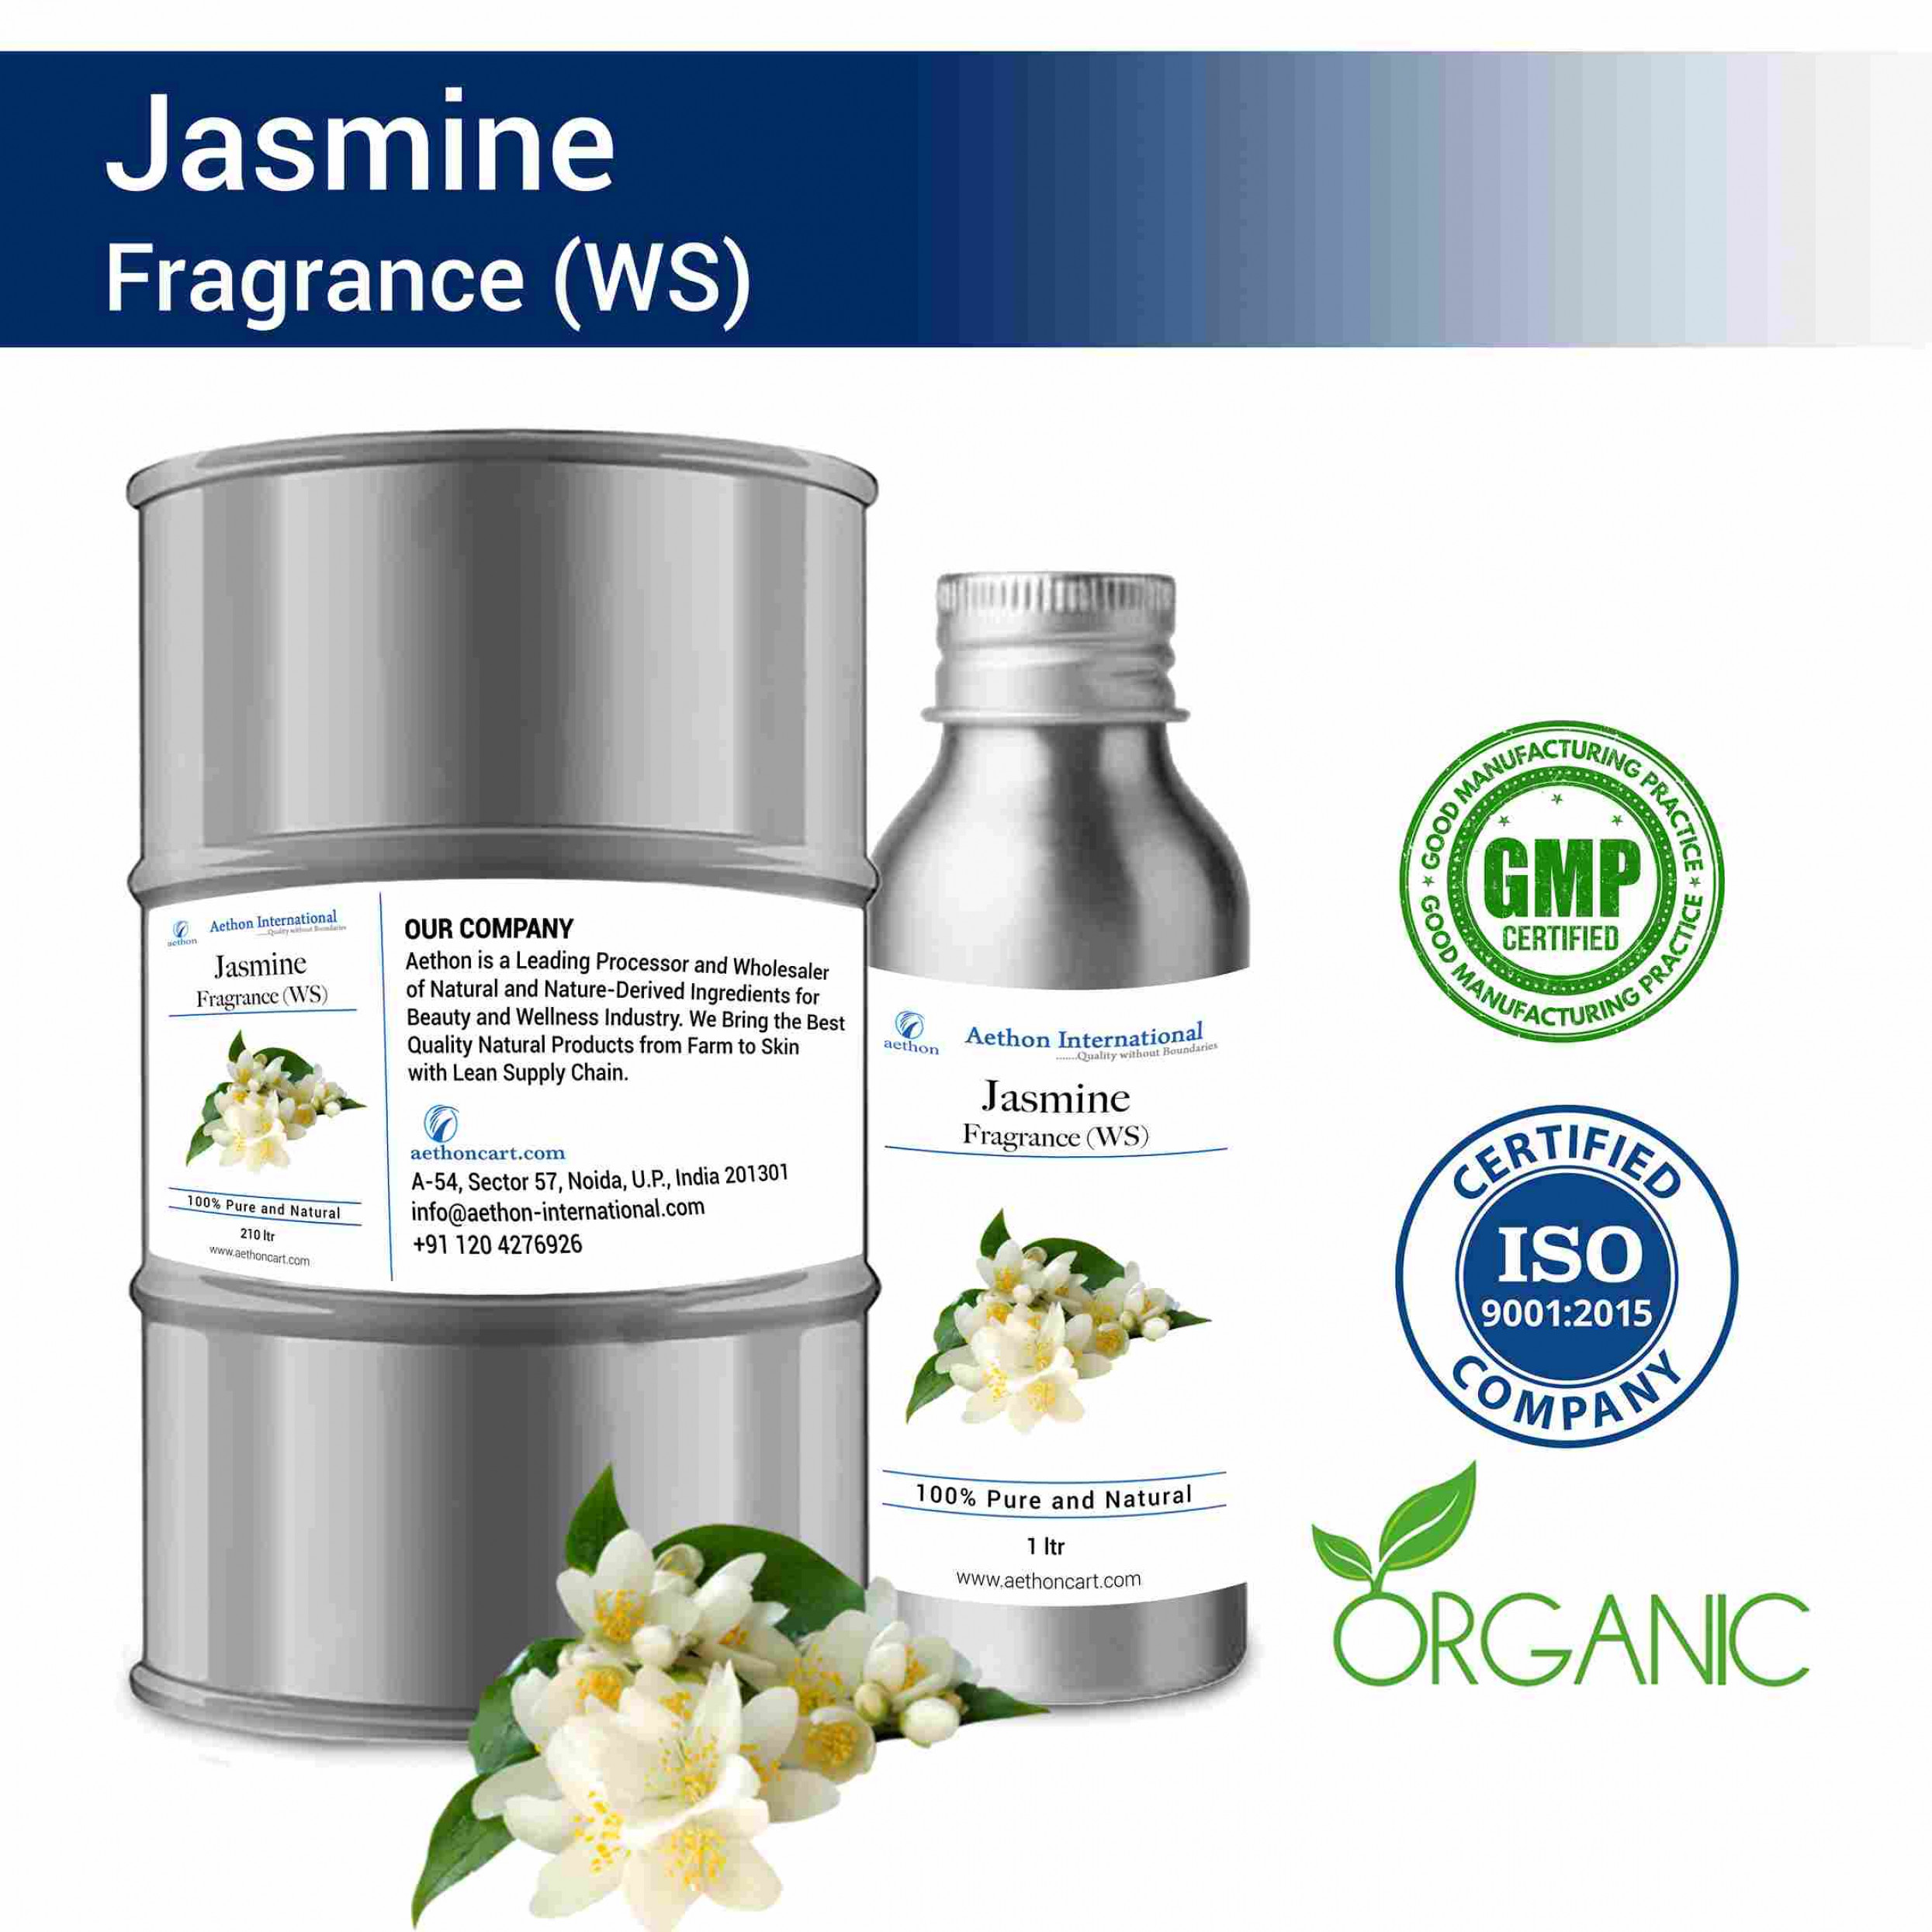 Jasmine Fragrance (WS)